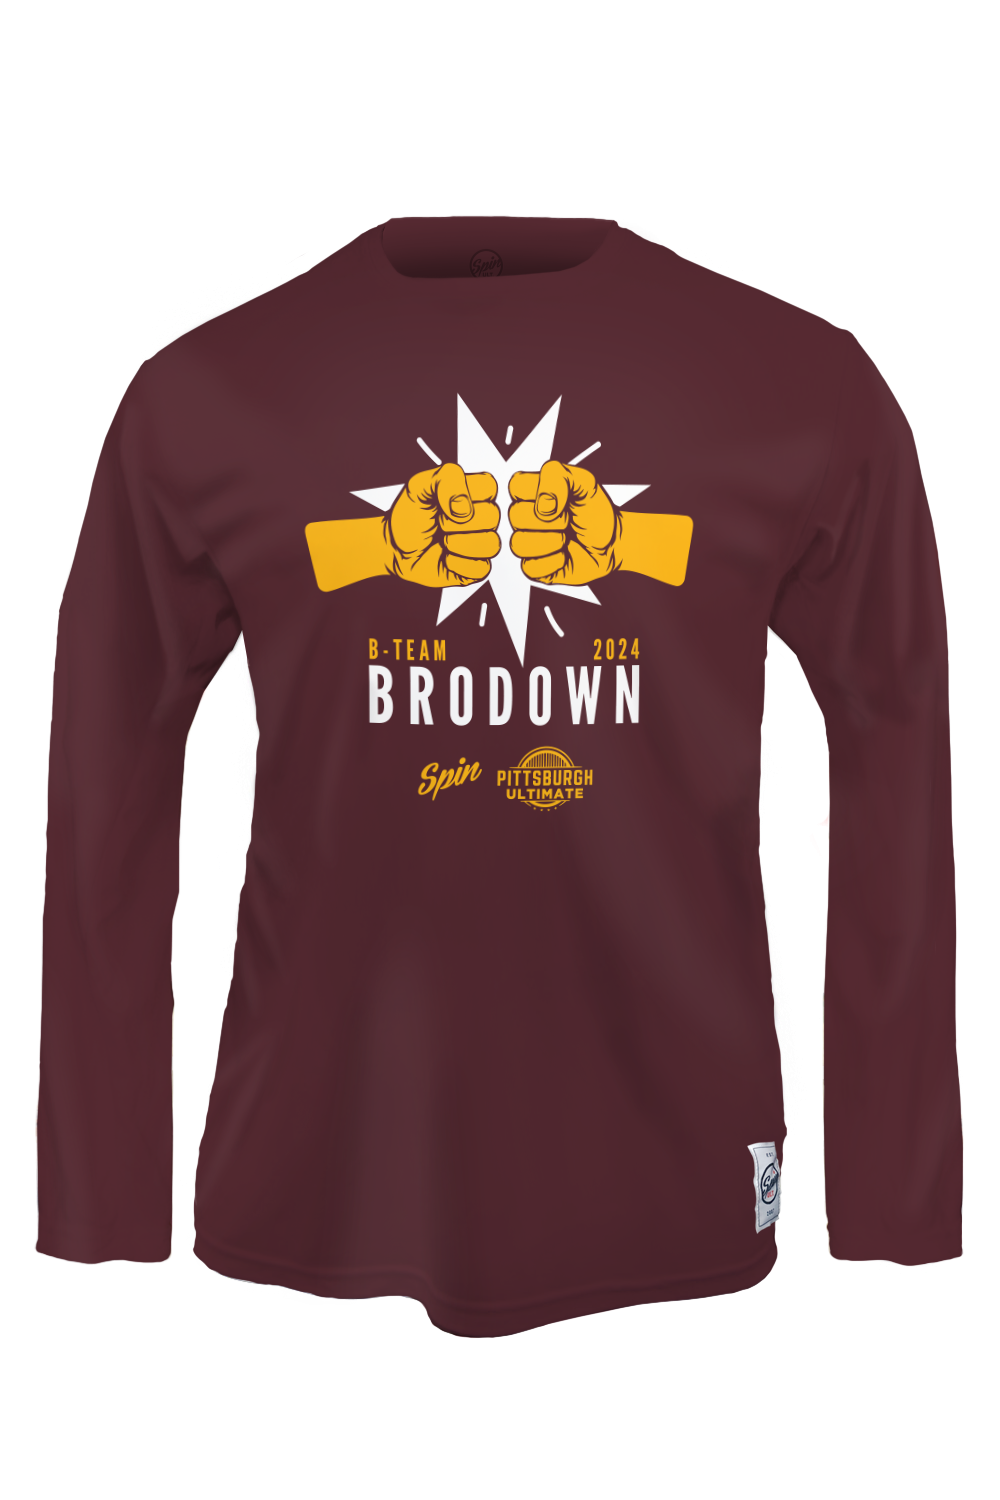 B-Team Brodown 2024 Long Sleeve Jersey